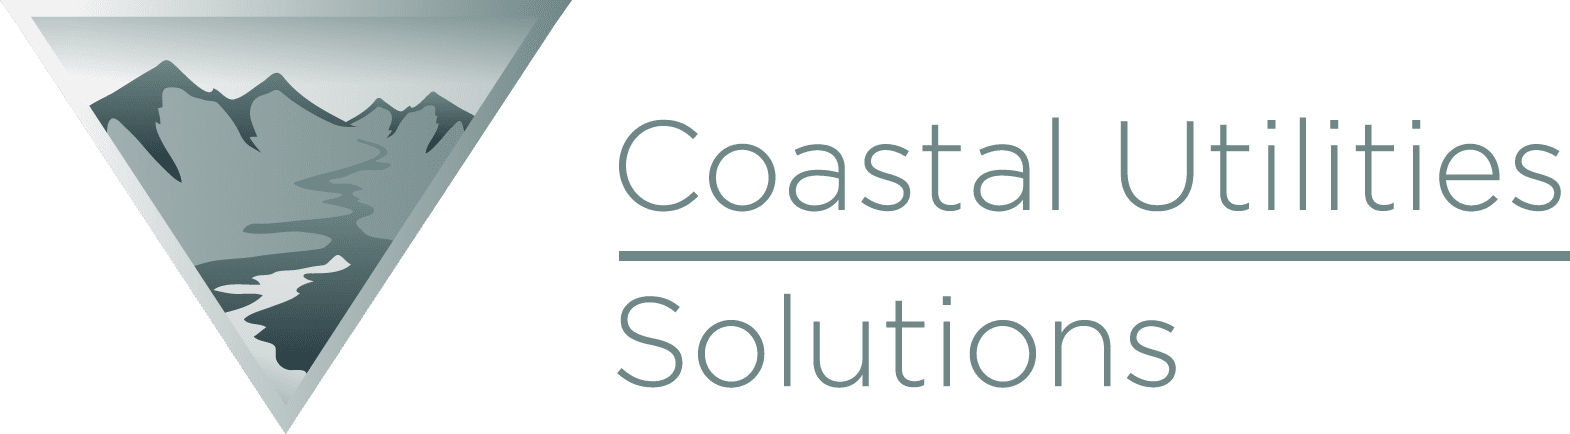 Coastal Utilities Solutions